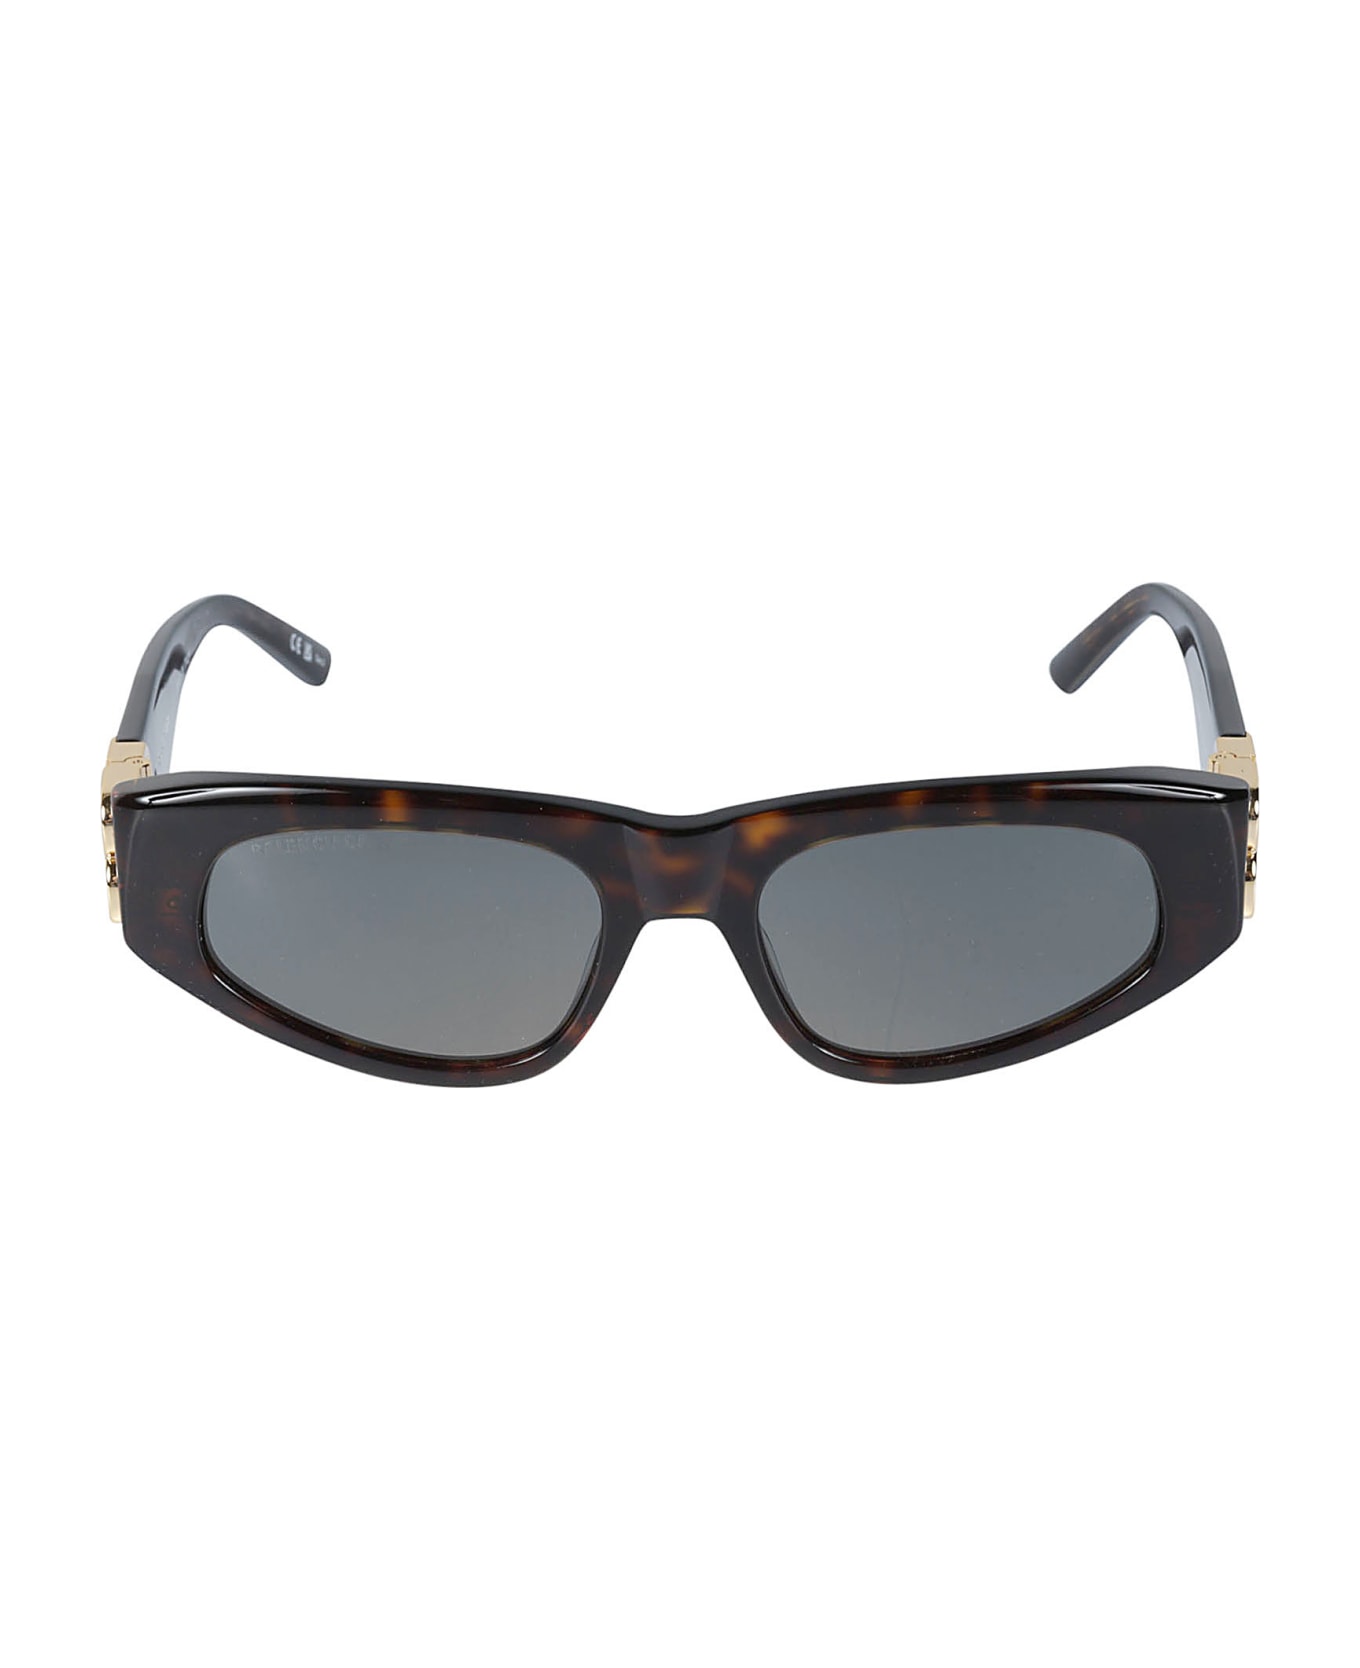 Balenciaga Eyewear One-size Sunglasses - Havana/Gold/Green サングラス